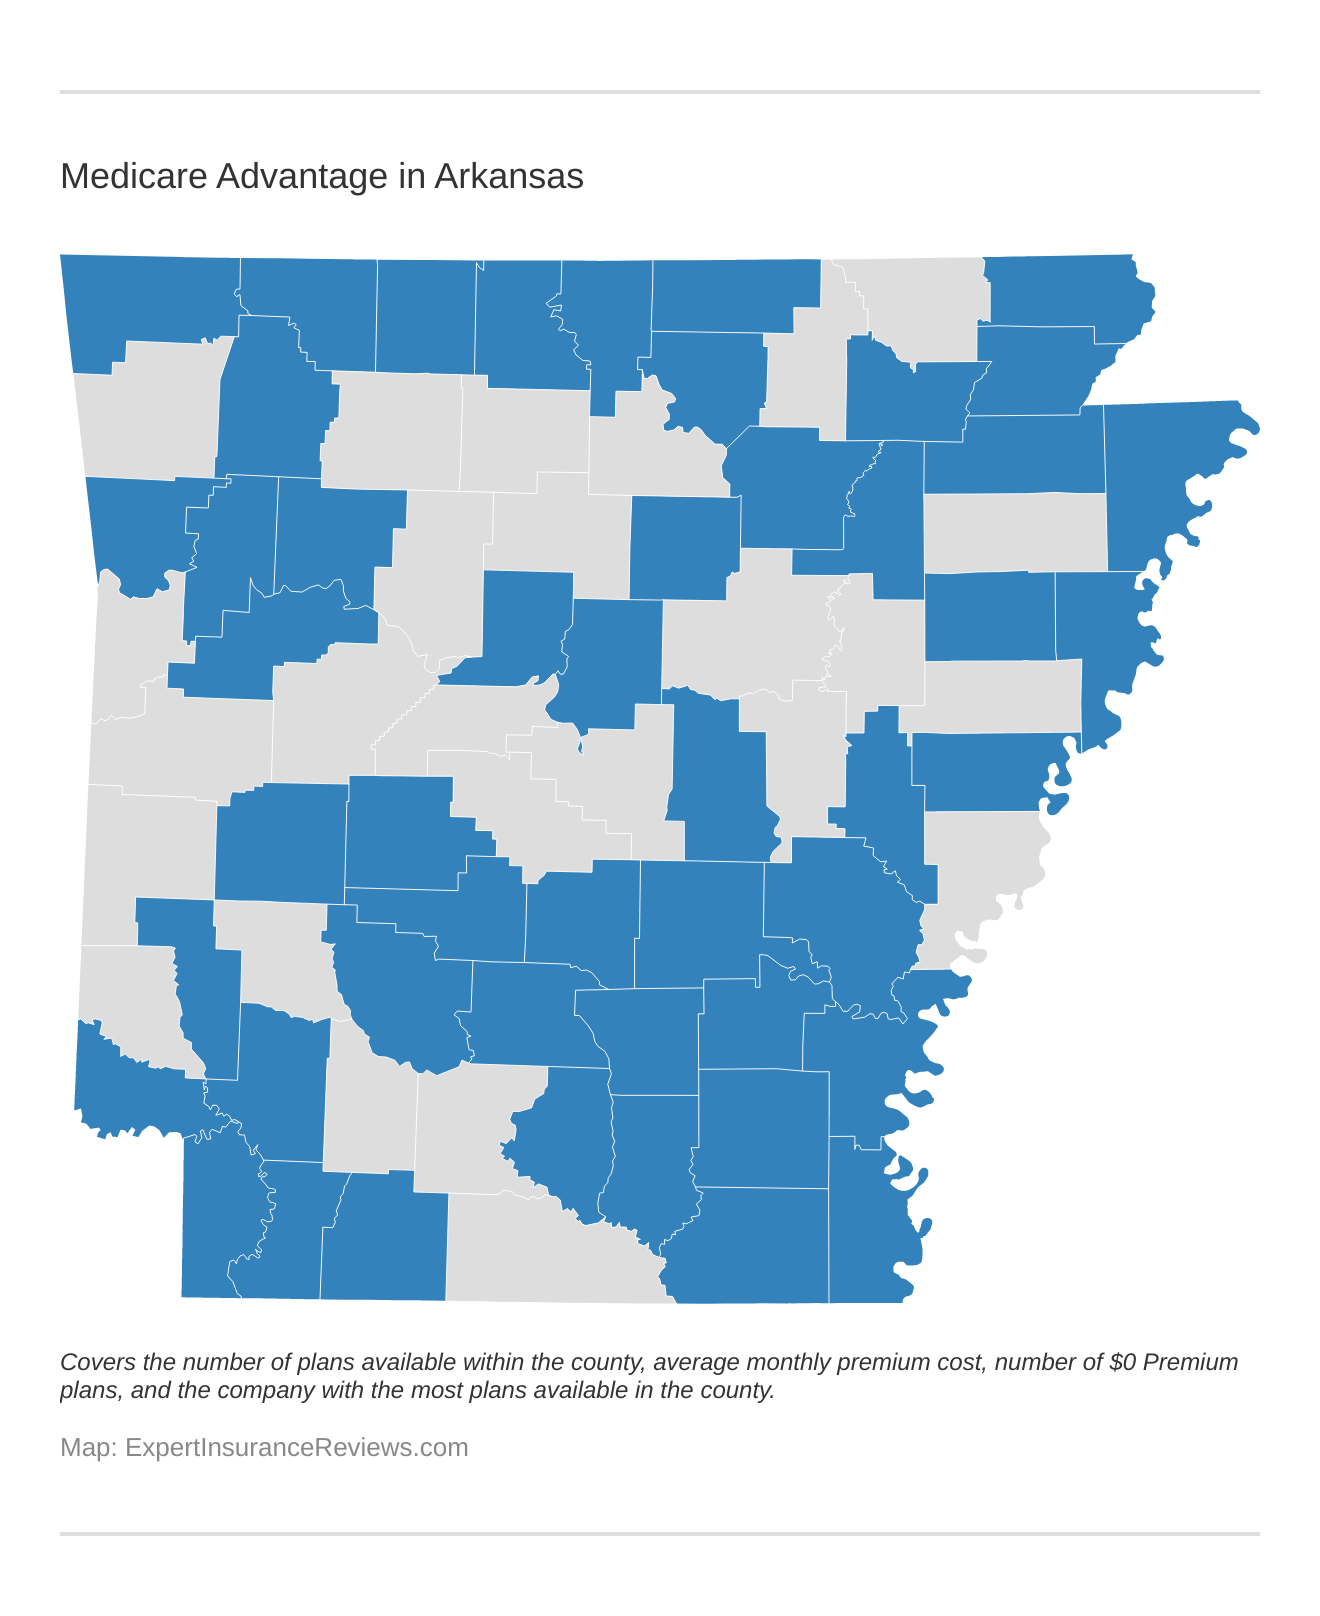 Medicare Advantage in Arkansas